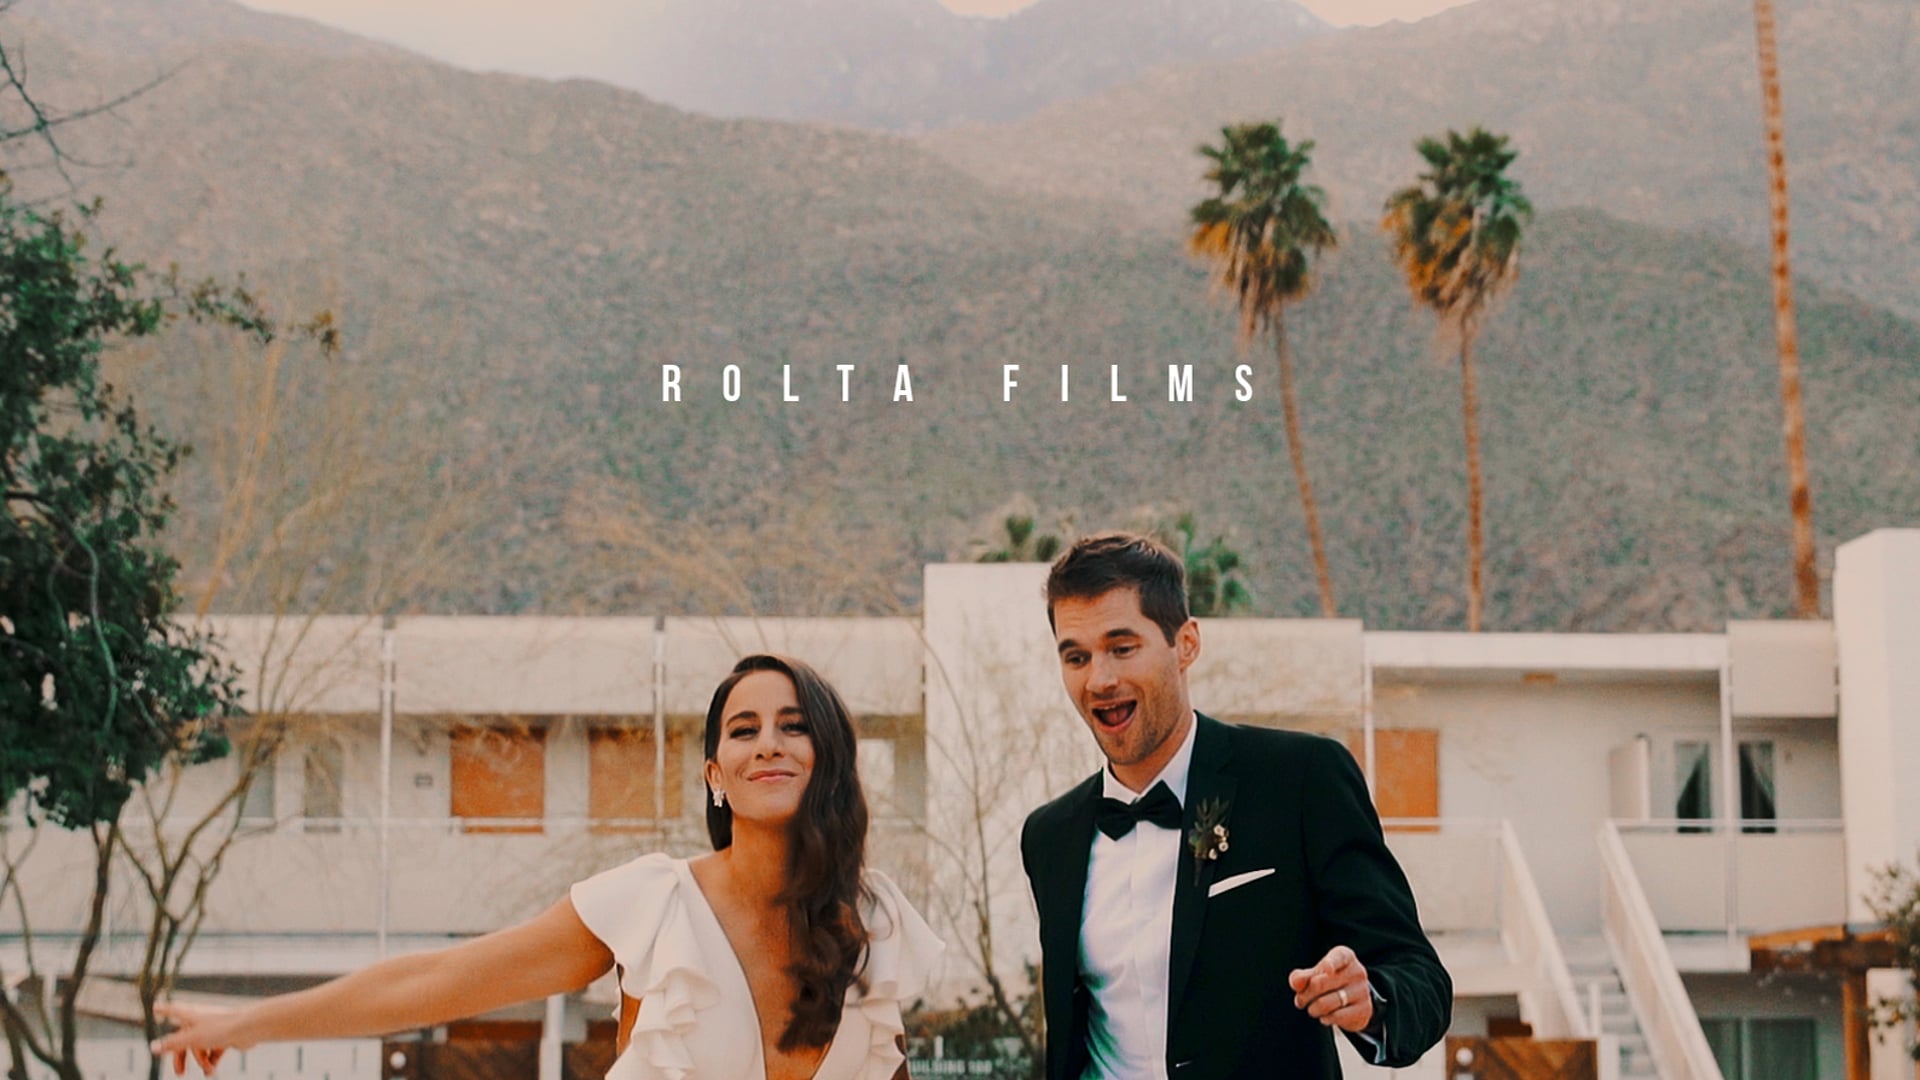 ROLTA FILMS  |  WEDDING SHOWREEL